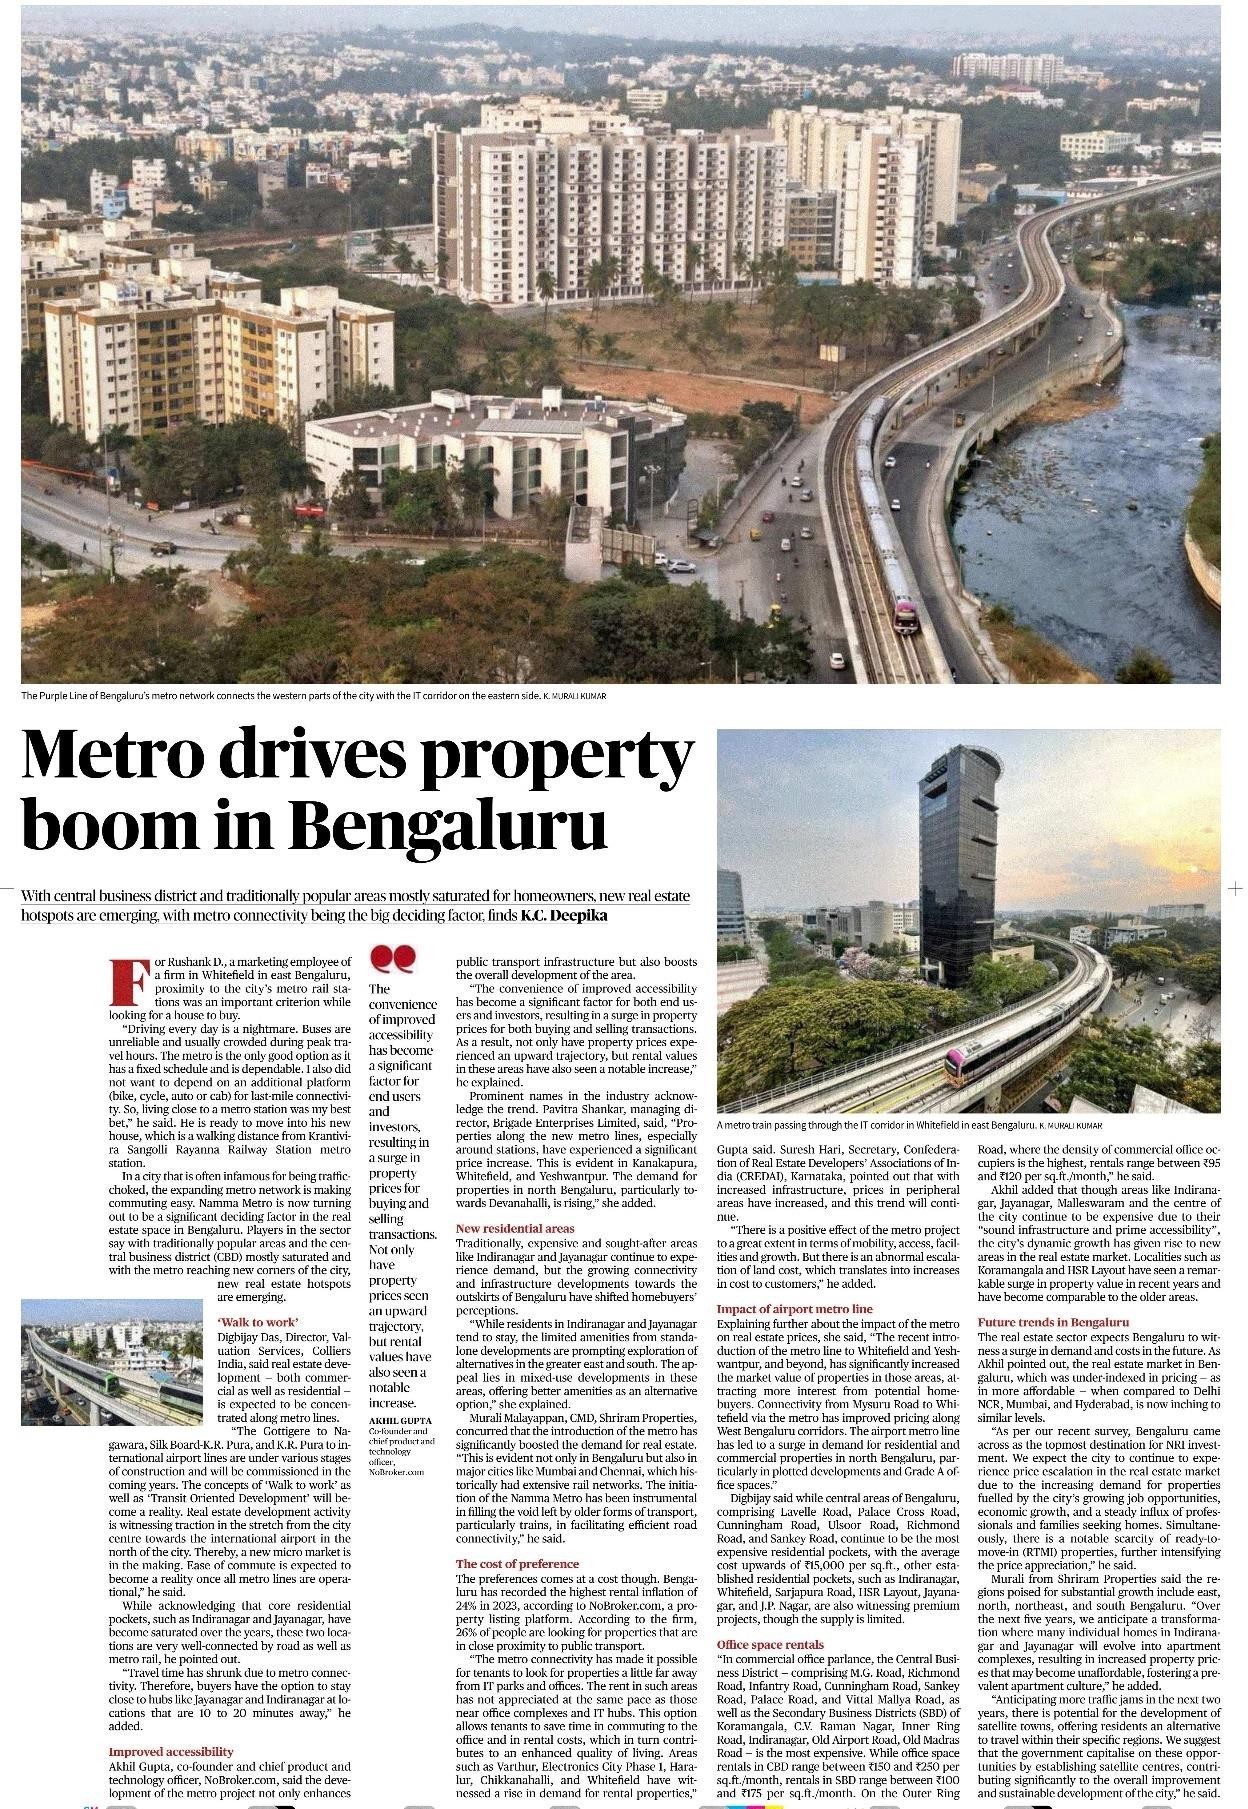 Metro Drives Property Boom In Bengaluru.